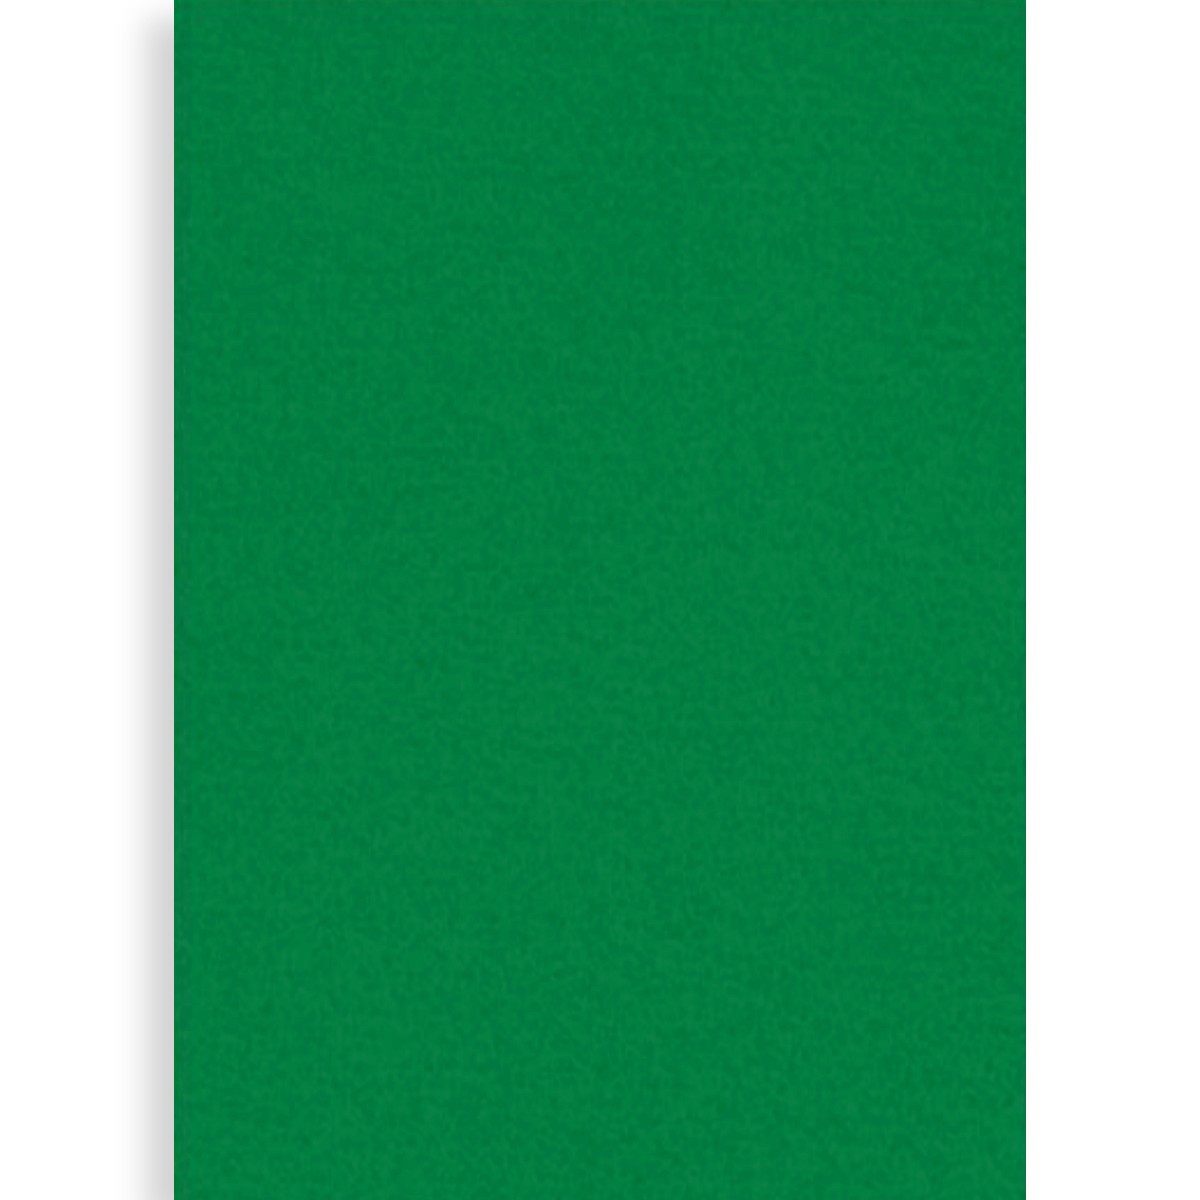 Pasla tare verde 40x60cm x 1 5mm MP PN682